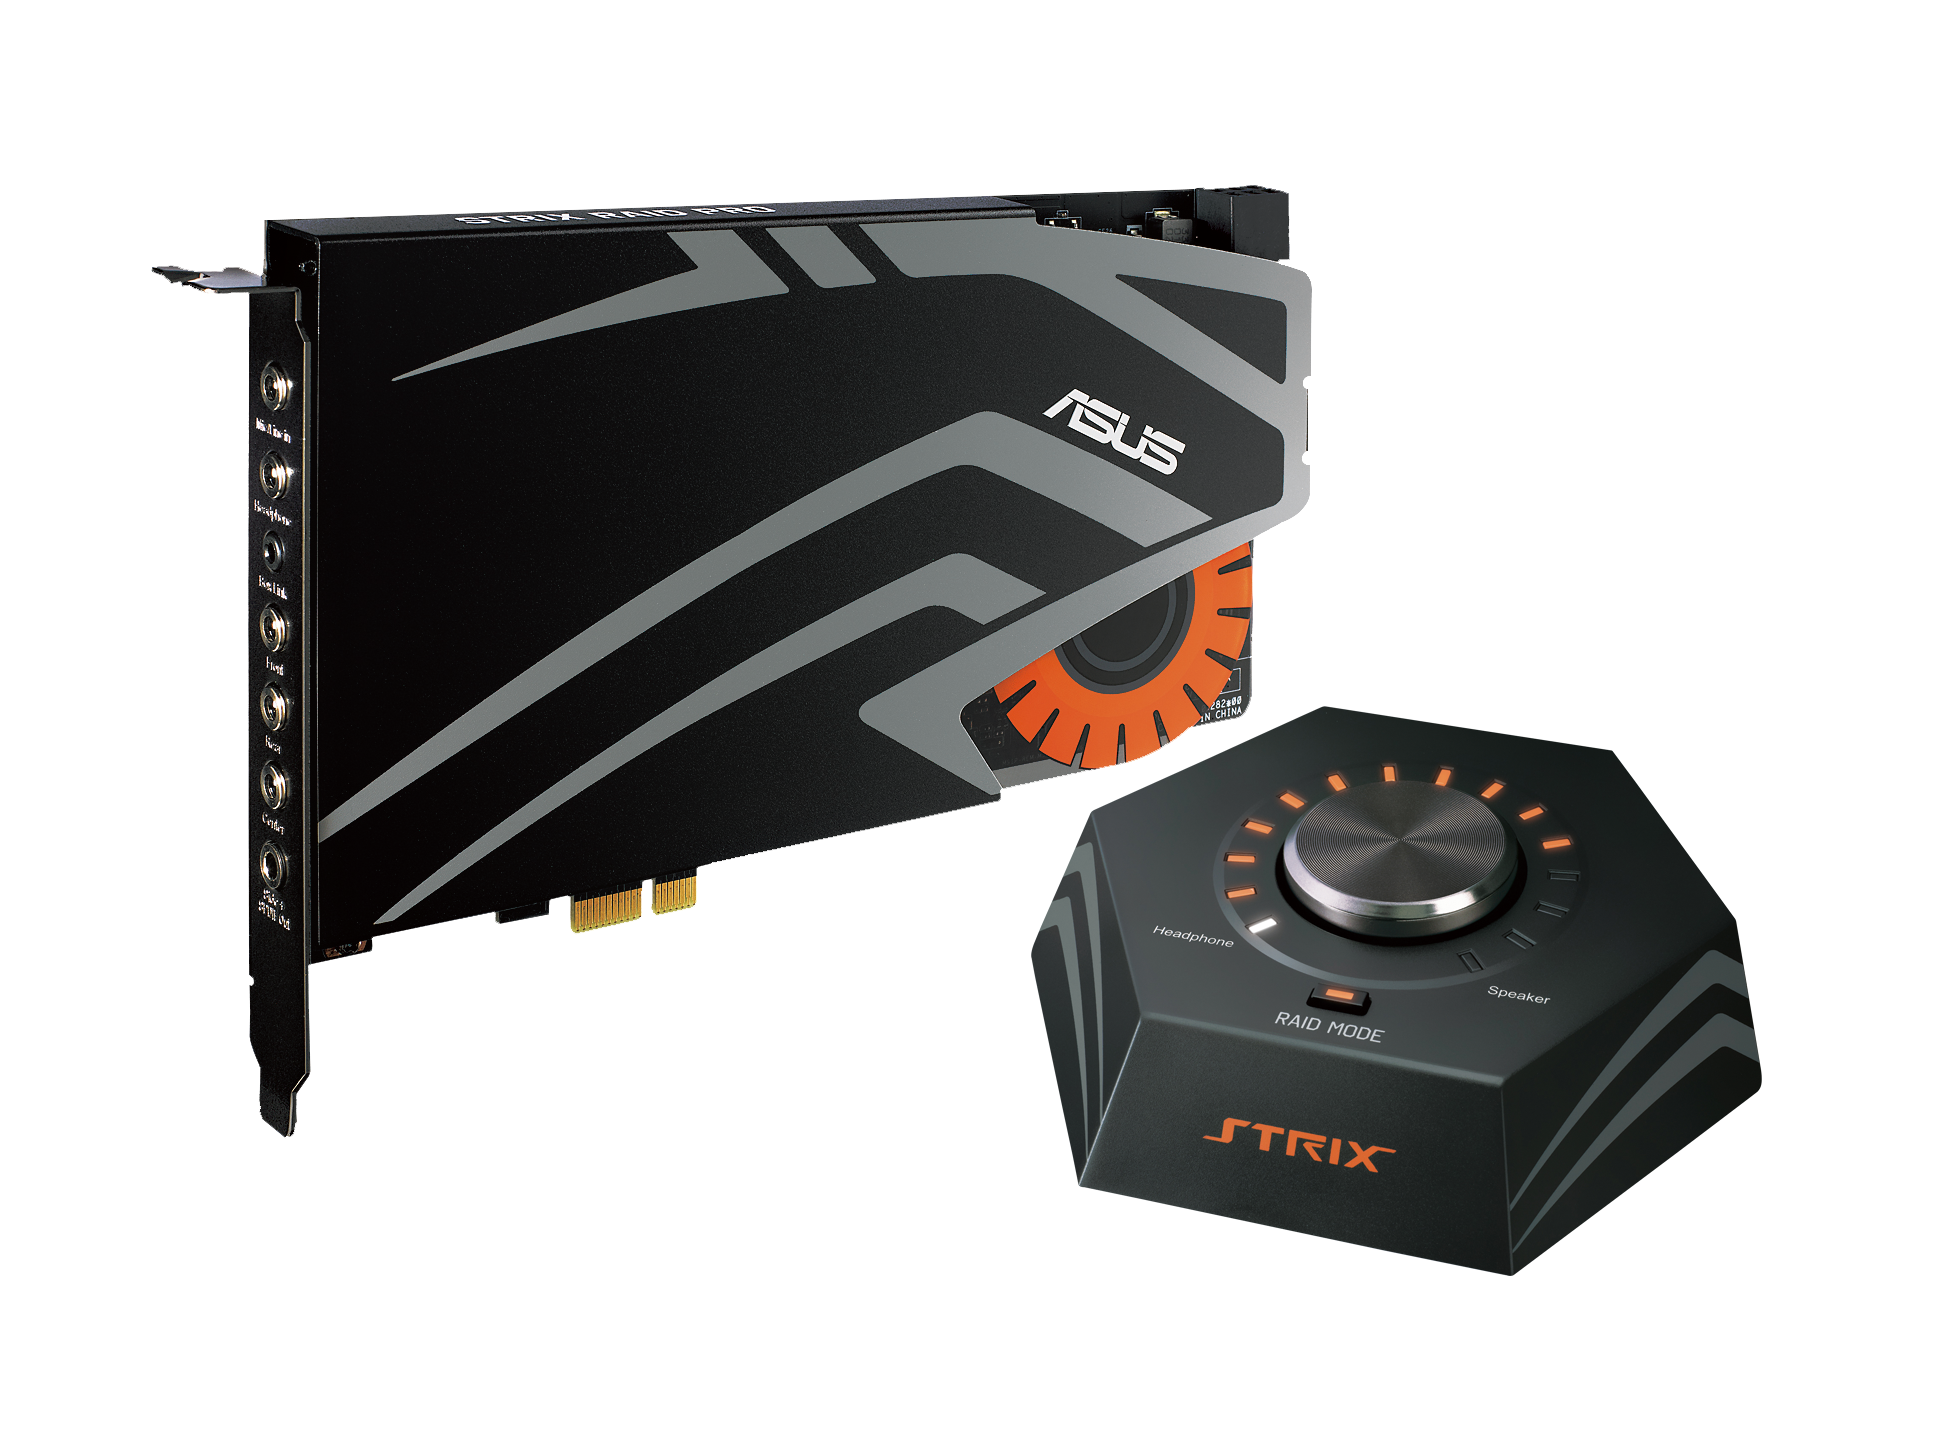 ASUS STRIX Raid Pro interne Gaming Soundkarte